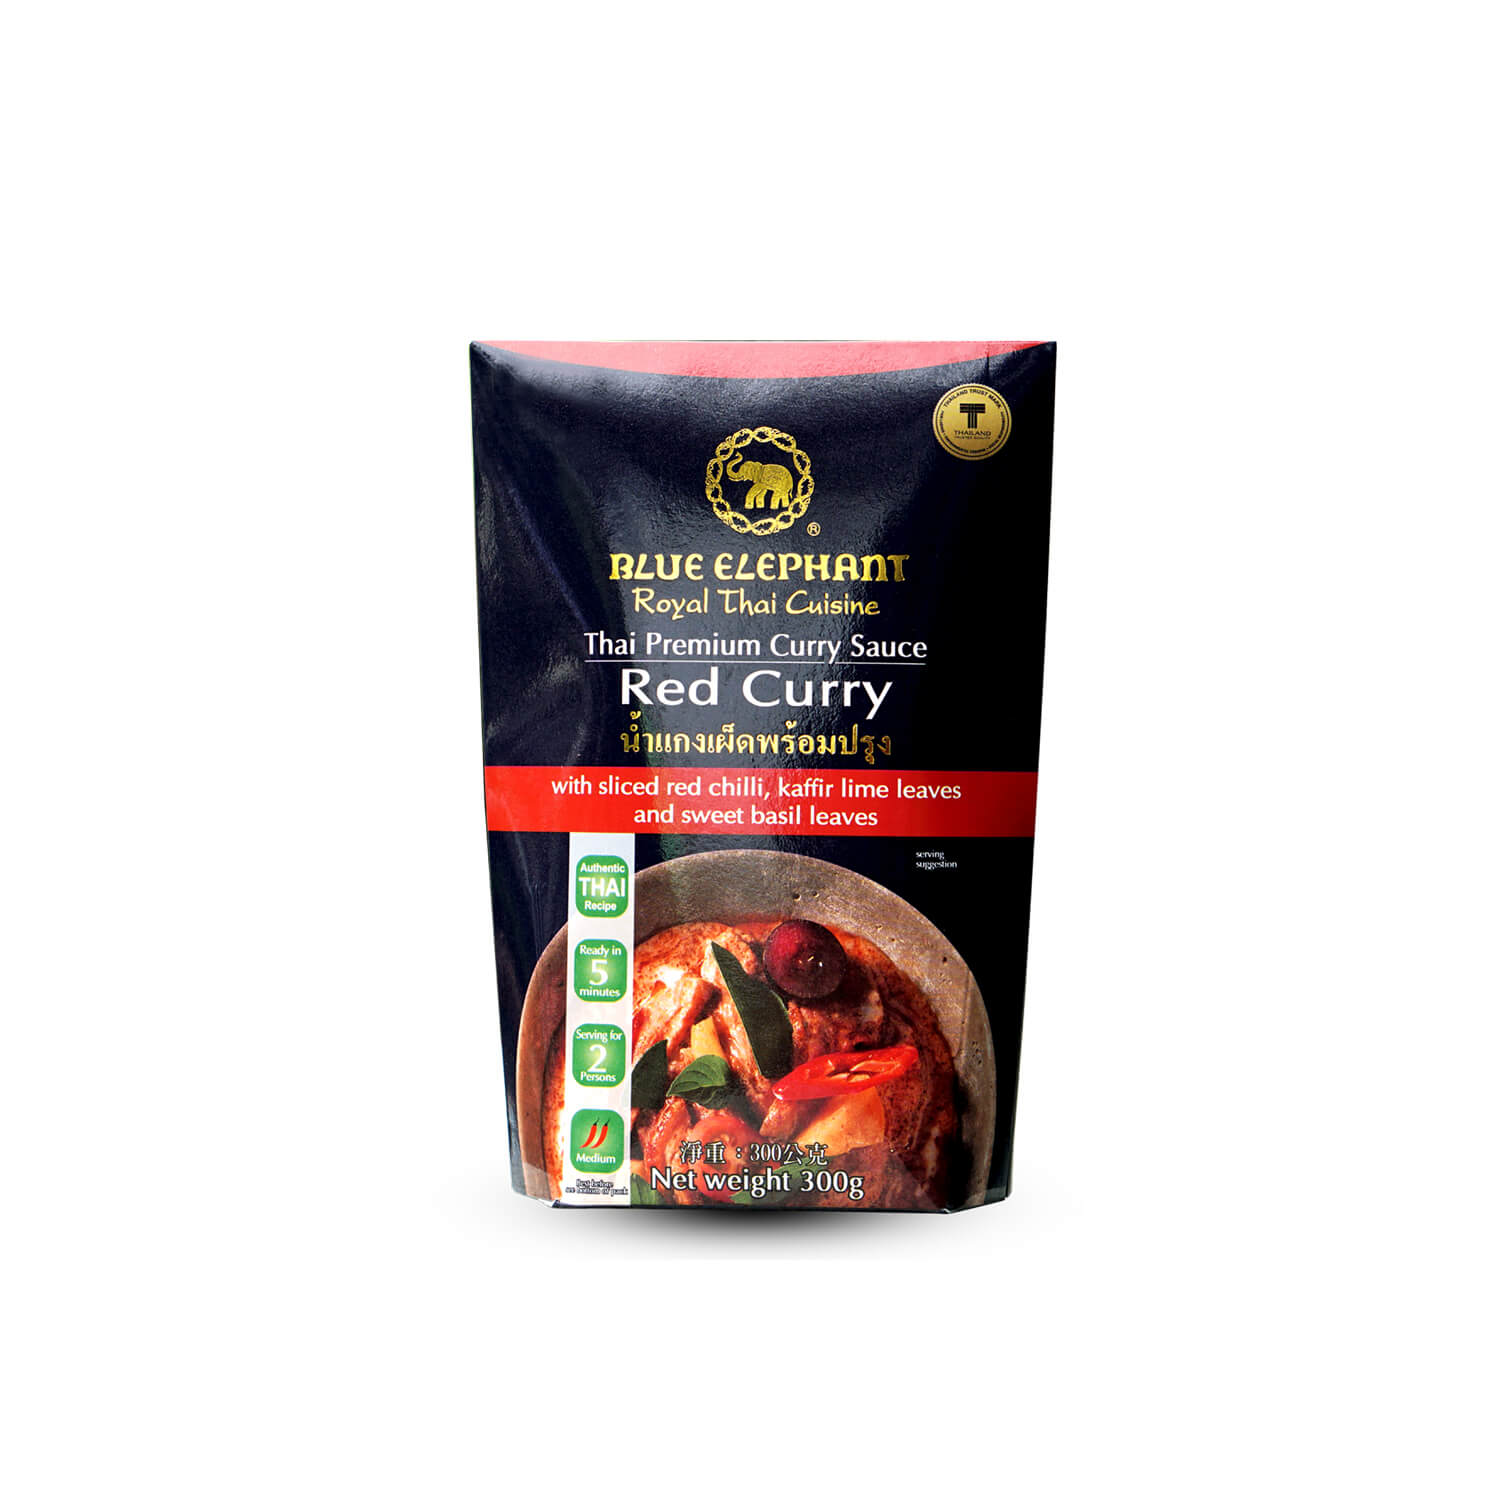 BLUE ELEPHANT Thai Premium Curry Sauce Red Curry 300g_免税价格_亿点免税